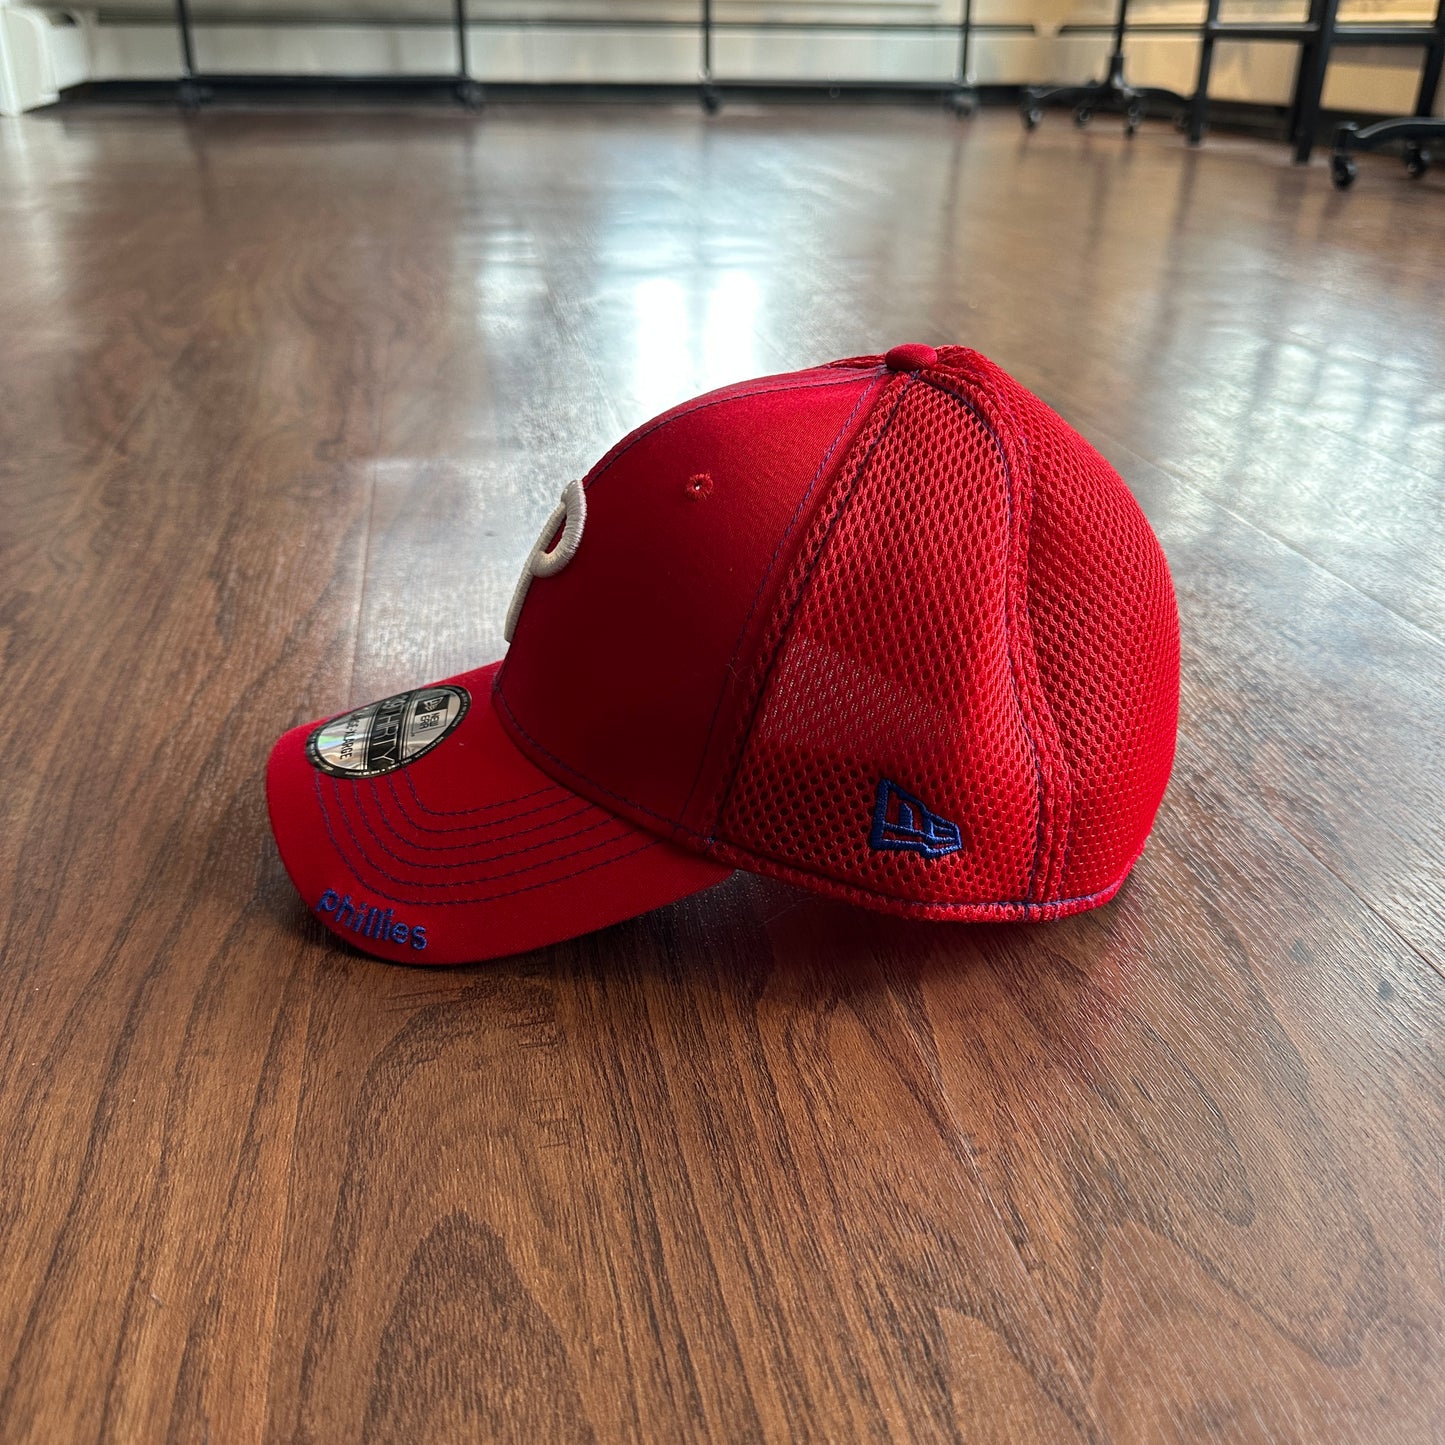 Phillies Red Trucker Hat